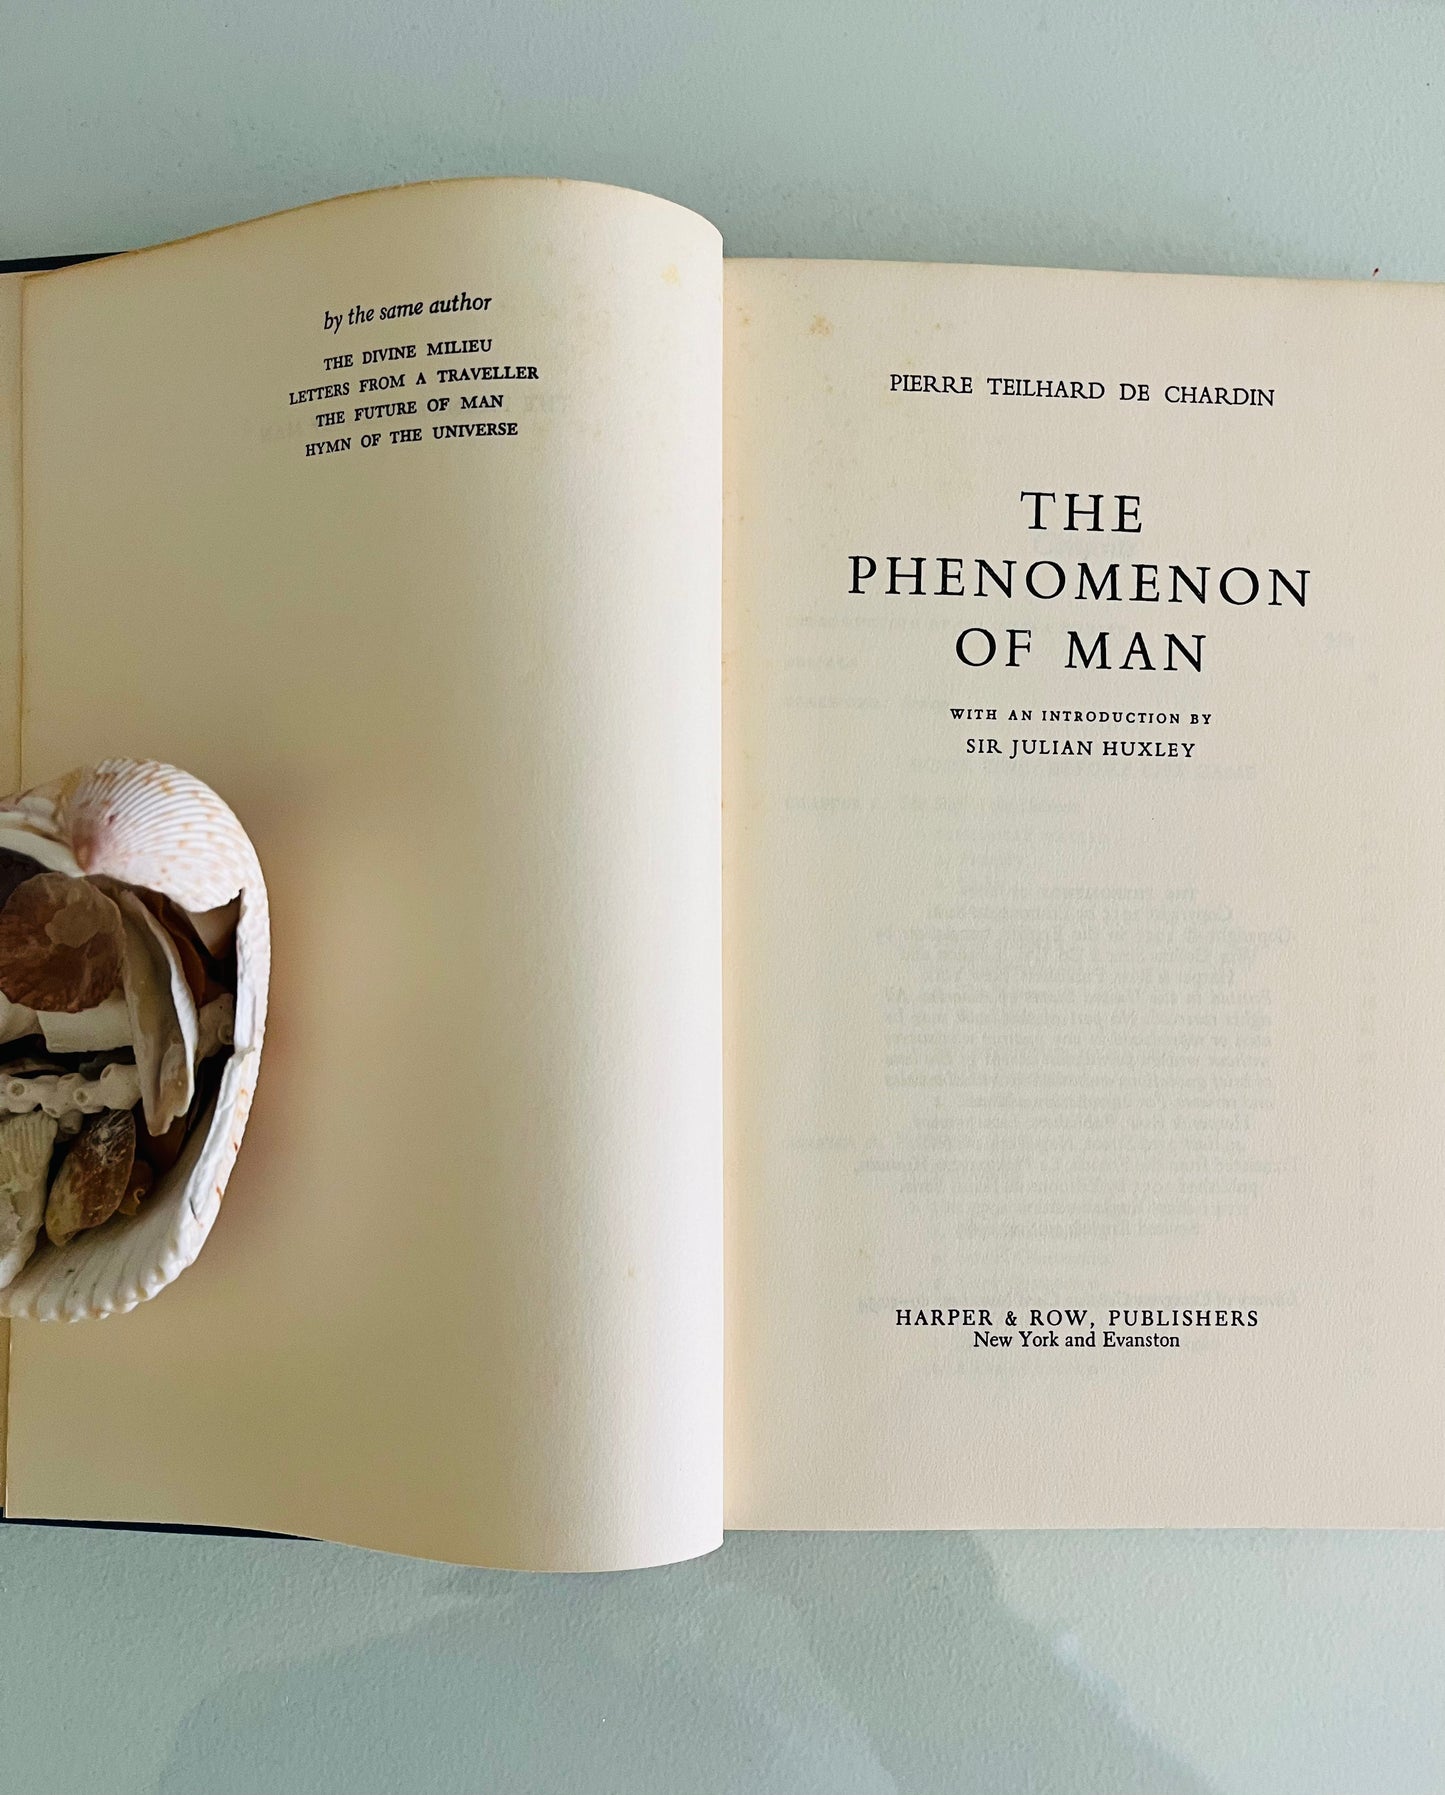 The Phenomenon of Man (sold)